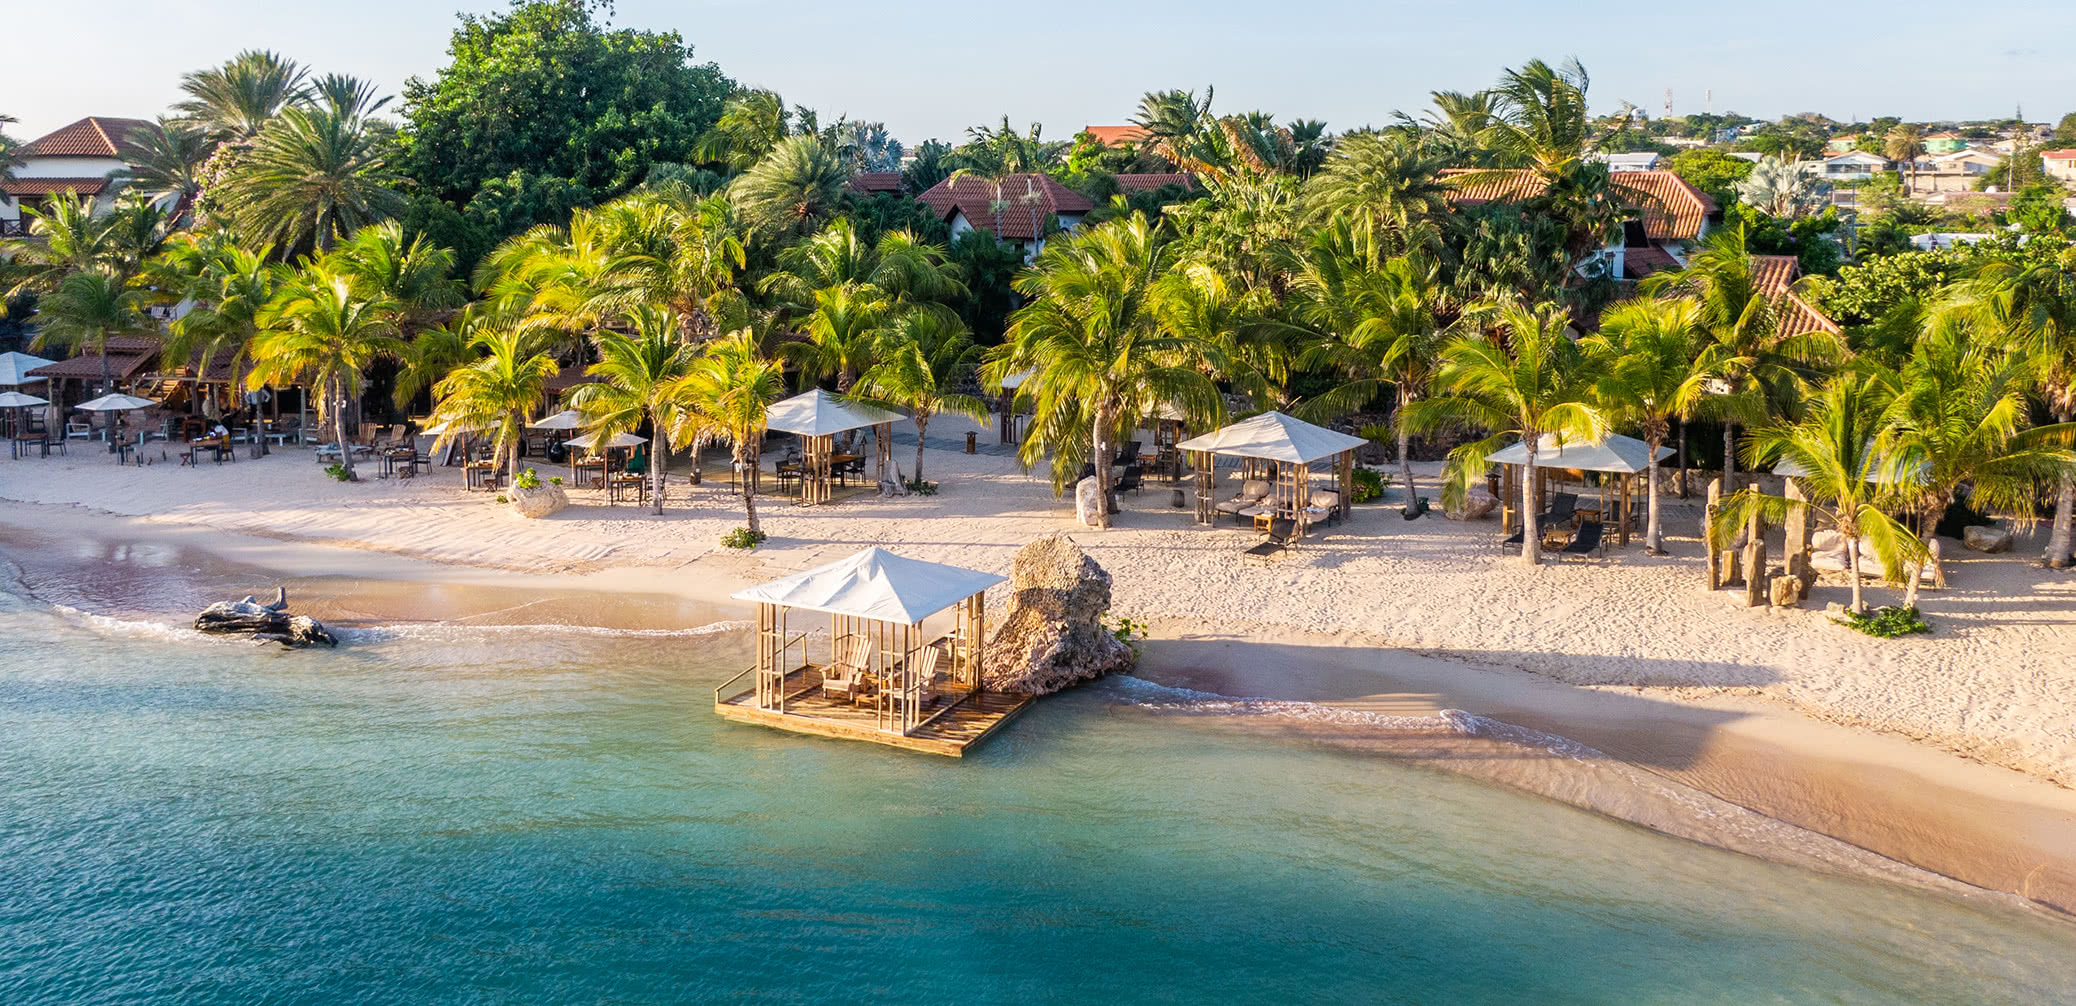 Bid On 2 Nights At The Stunning Baoase Luxury Resort, Curaçao In The Caribbean